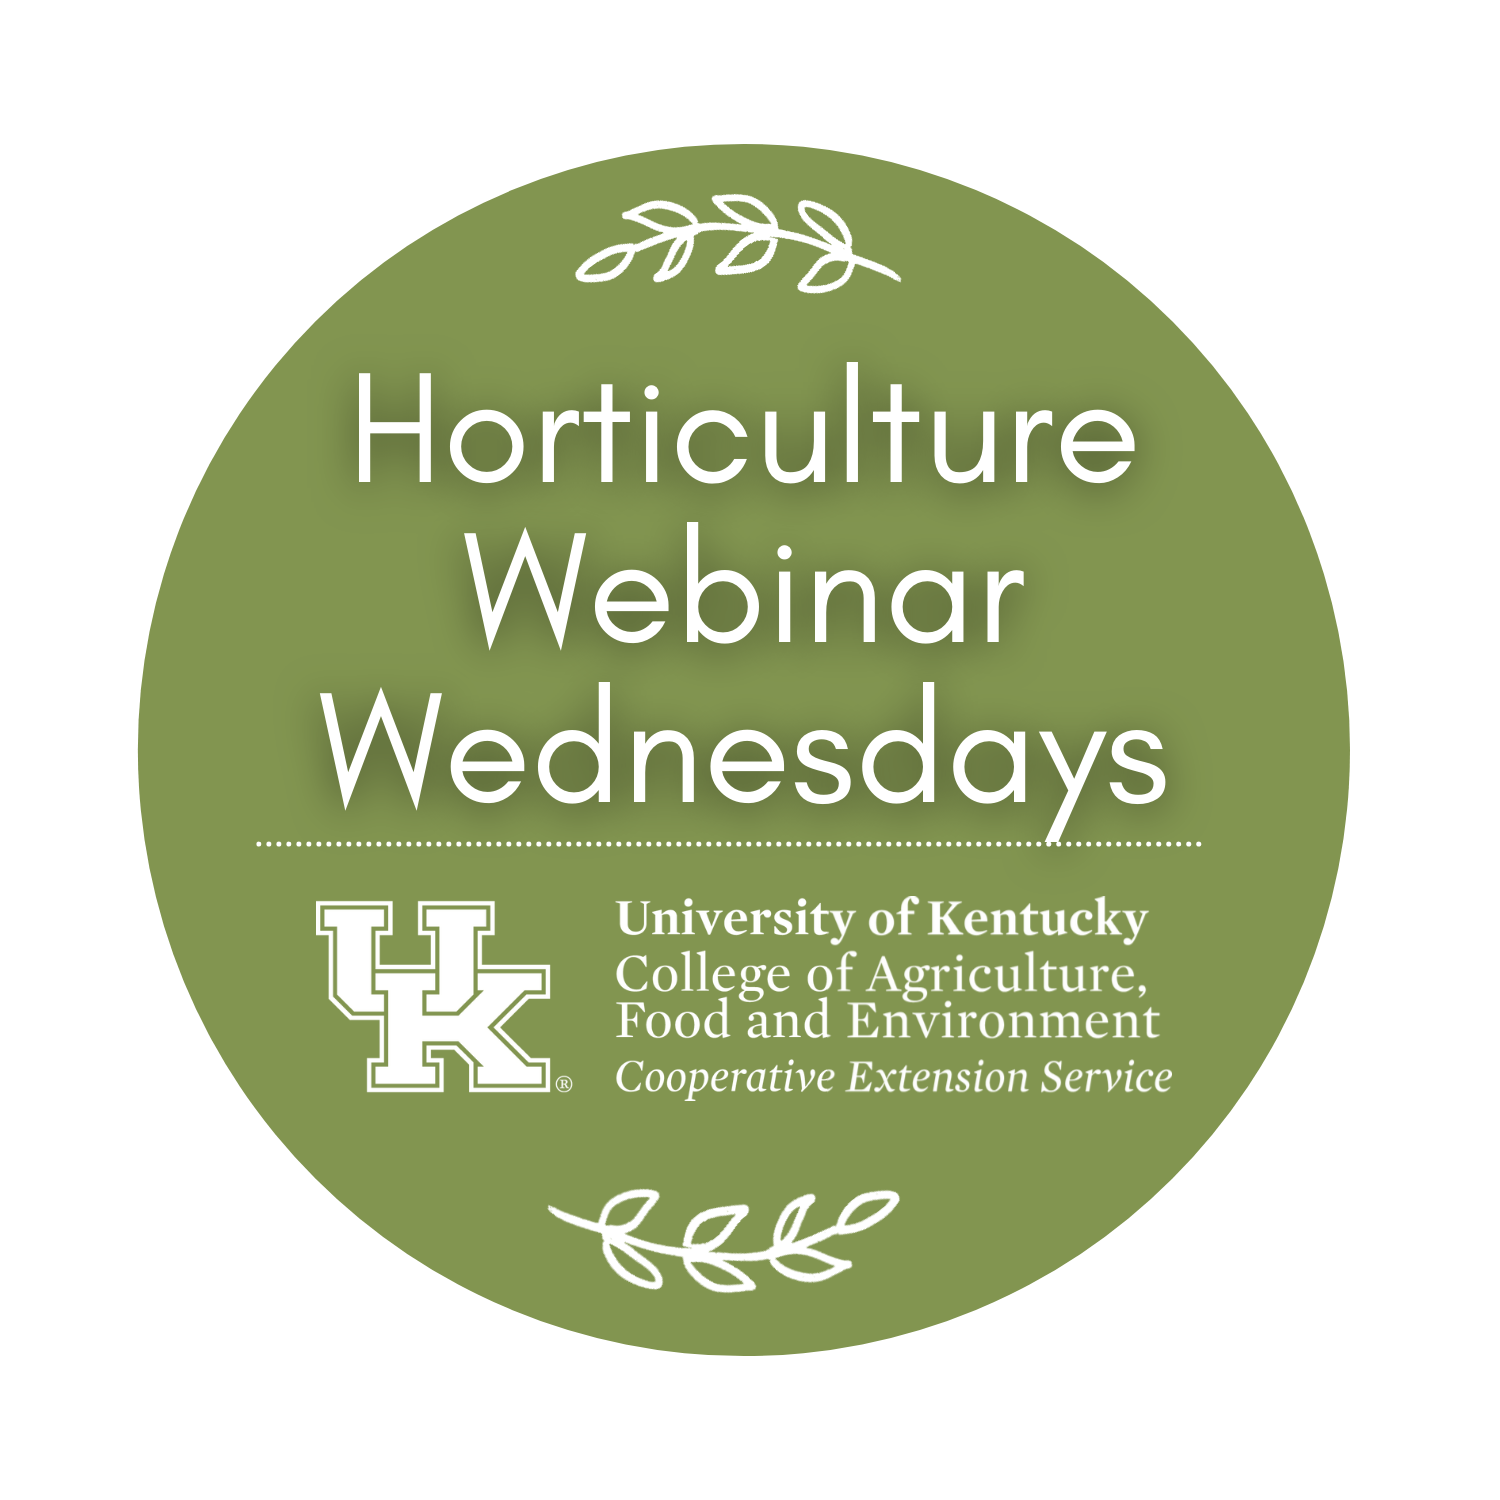 Horticulture Webinar Wednesday logo